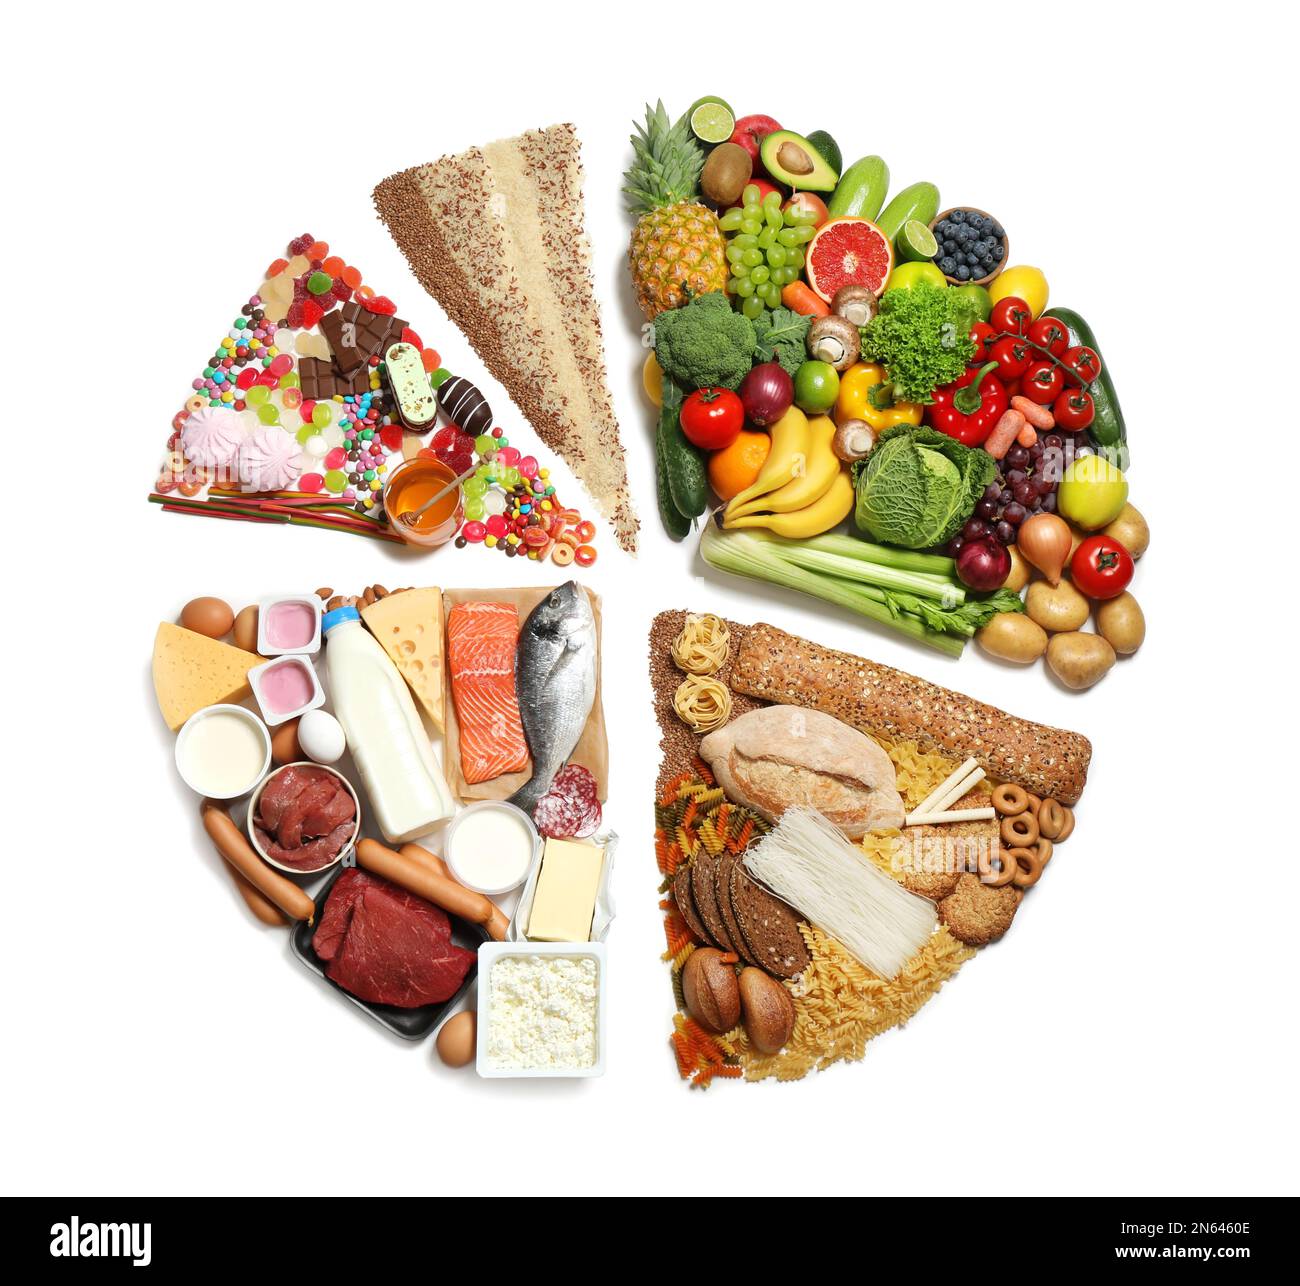 https://c8.alamy.com/comp/2N6460E/food-pie-chart-on-white-background-top-view-healthy-balanced-diet-2N6460E.jpg